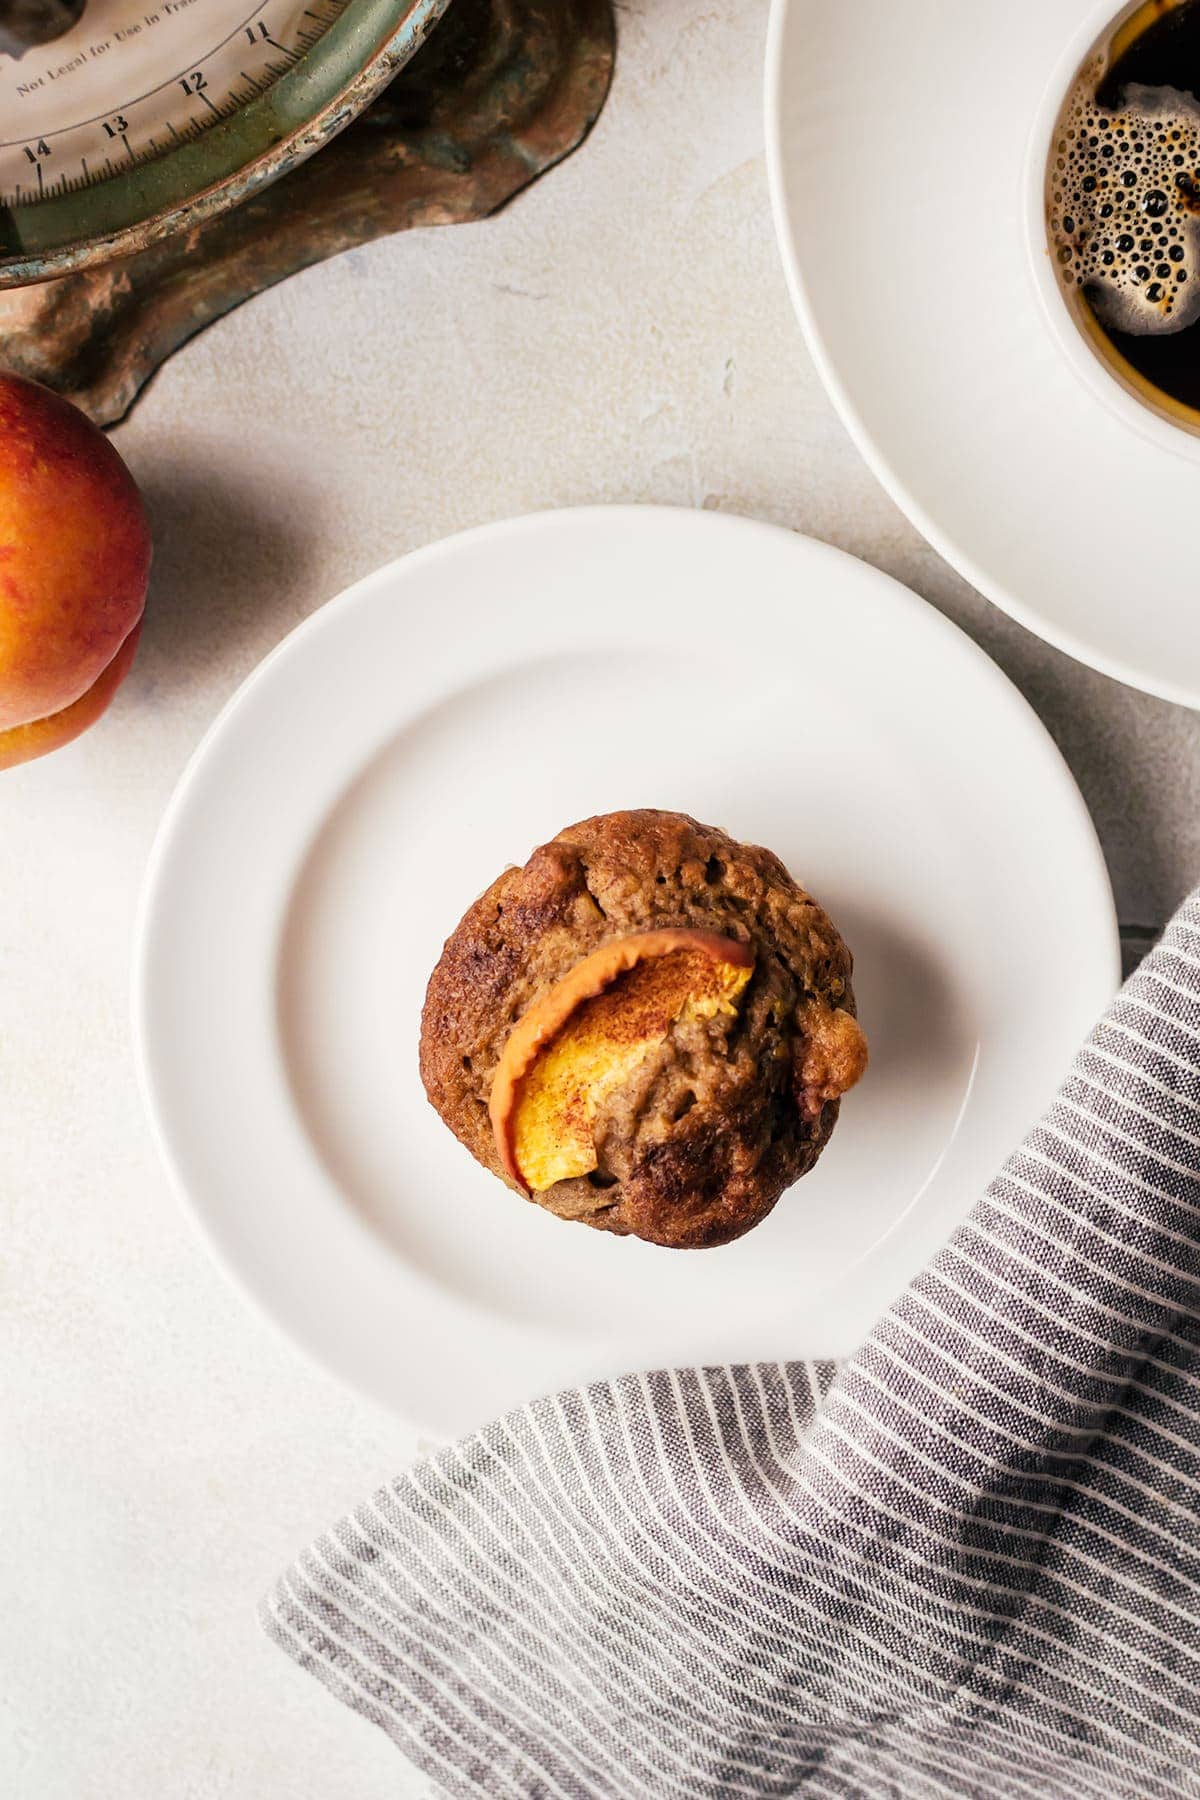 These cinnamon peach muffins are an easy treat that tastes just like peach cobbler